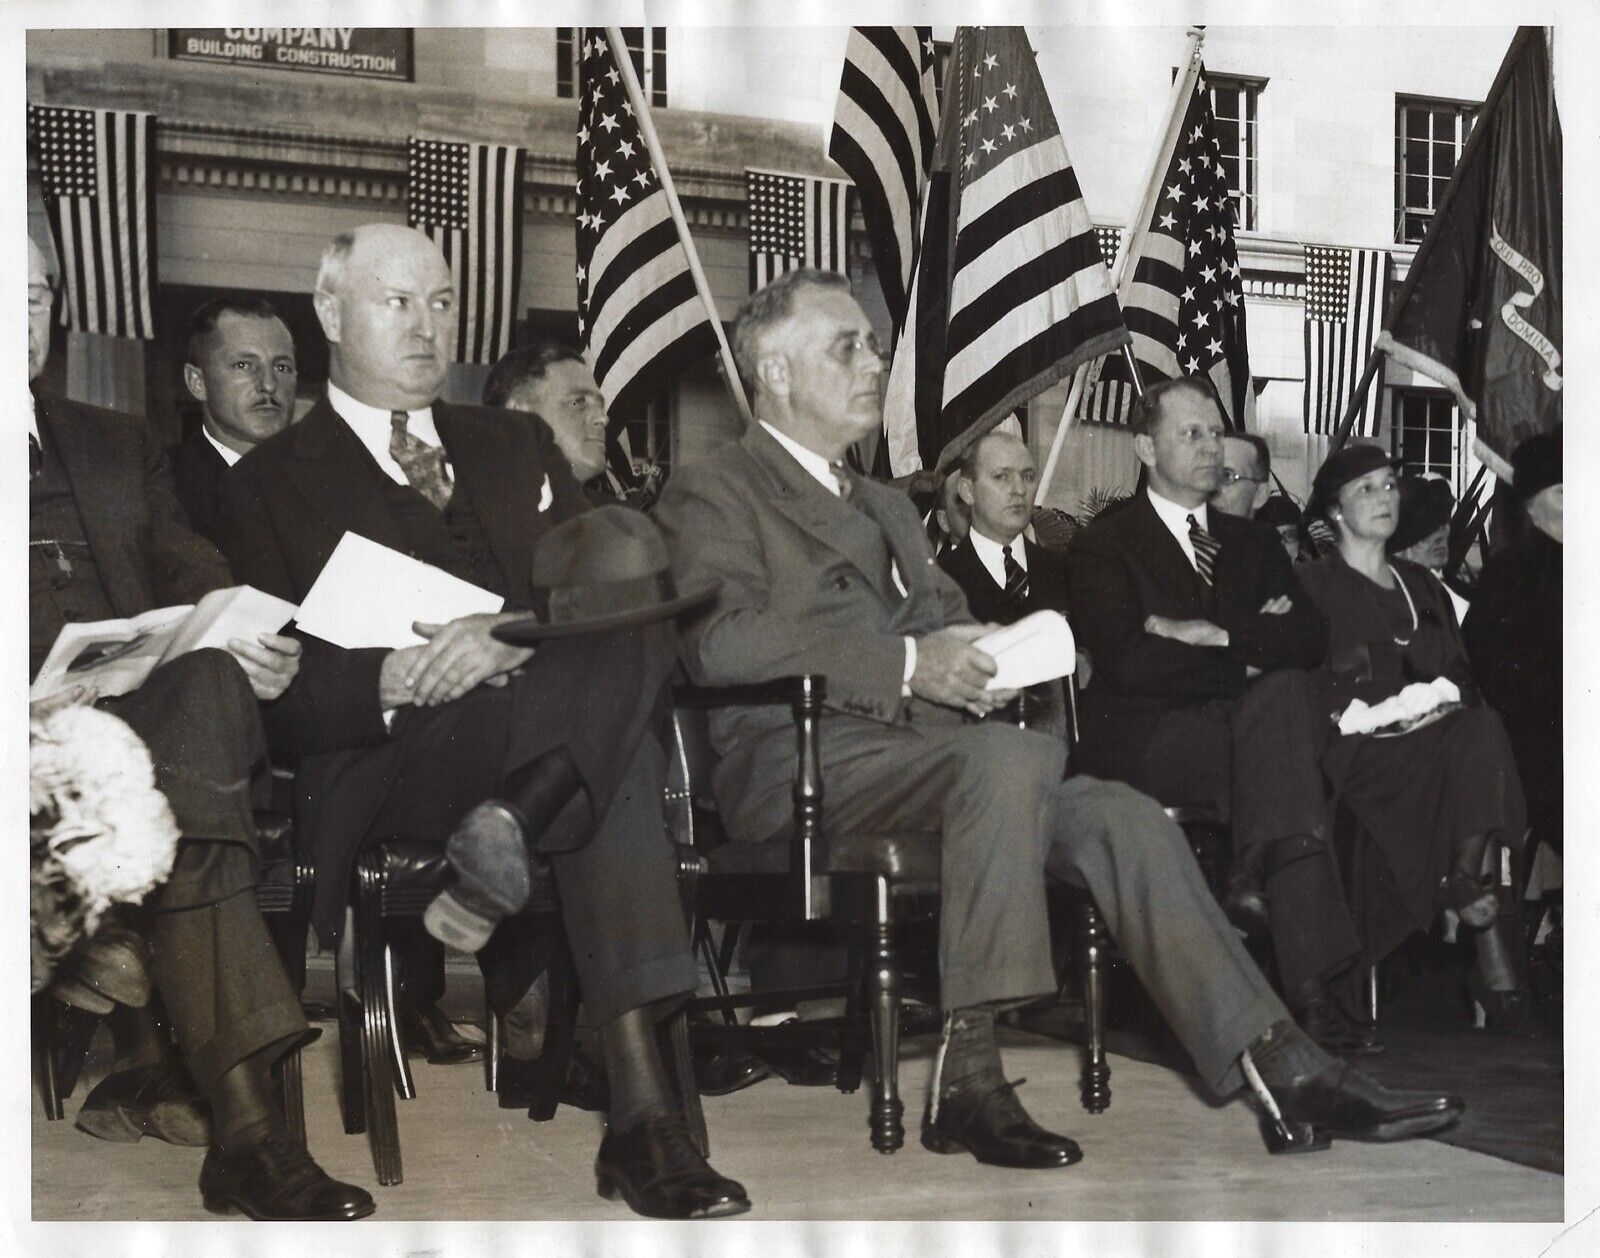 25 October 1934 press photo of Franklin Roosevelt in Washington D.C.